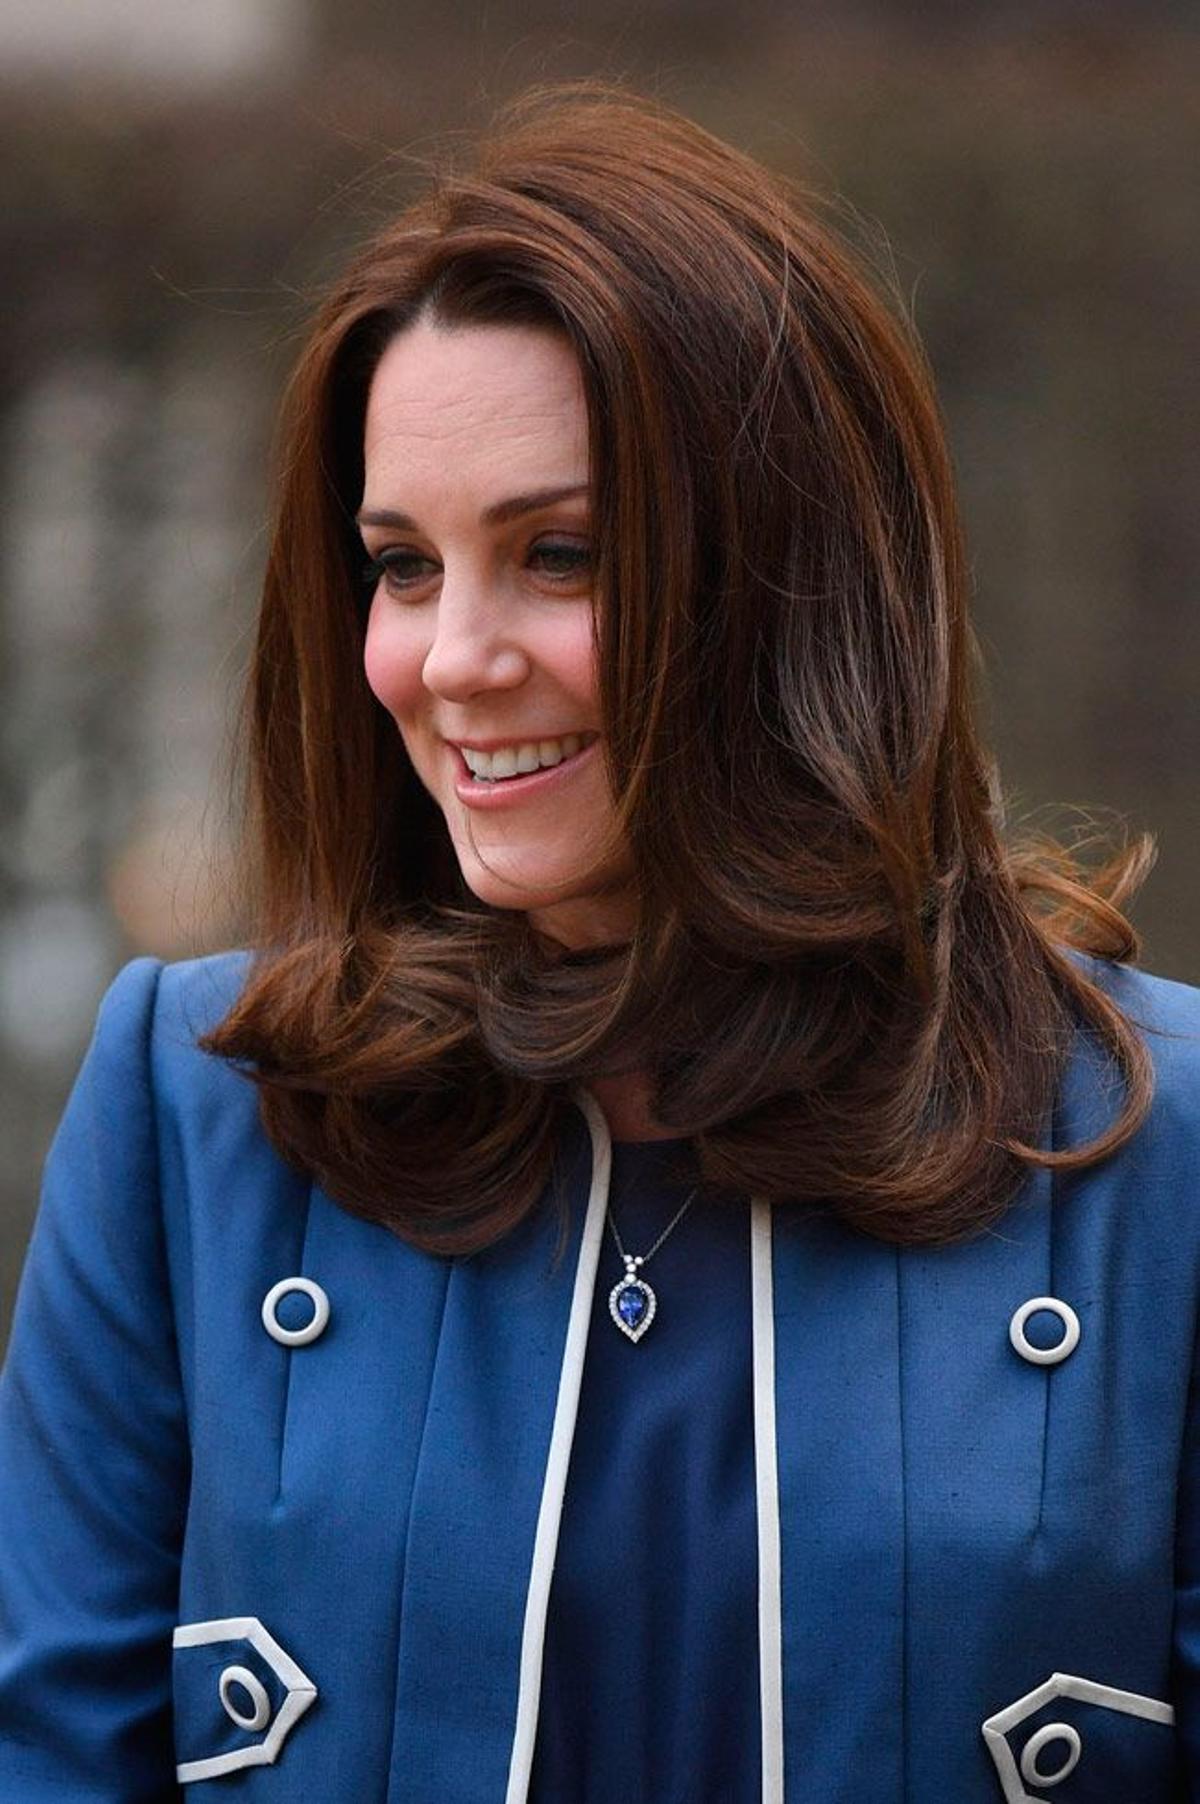 Detalle del colgante de Kate Middleton en su visita al hospital St. Thomas de Londres